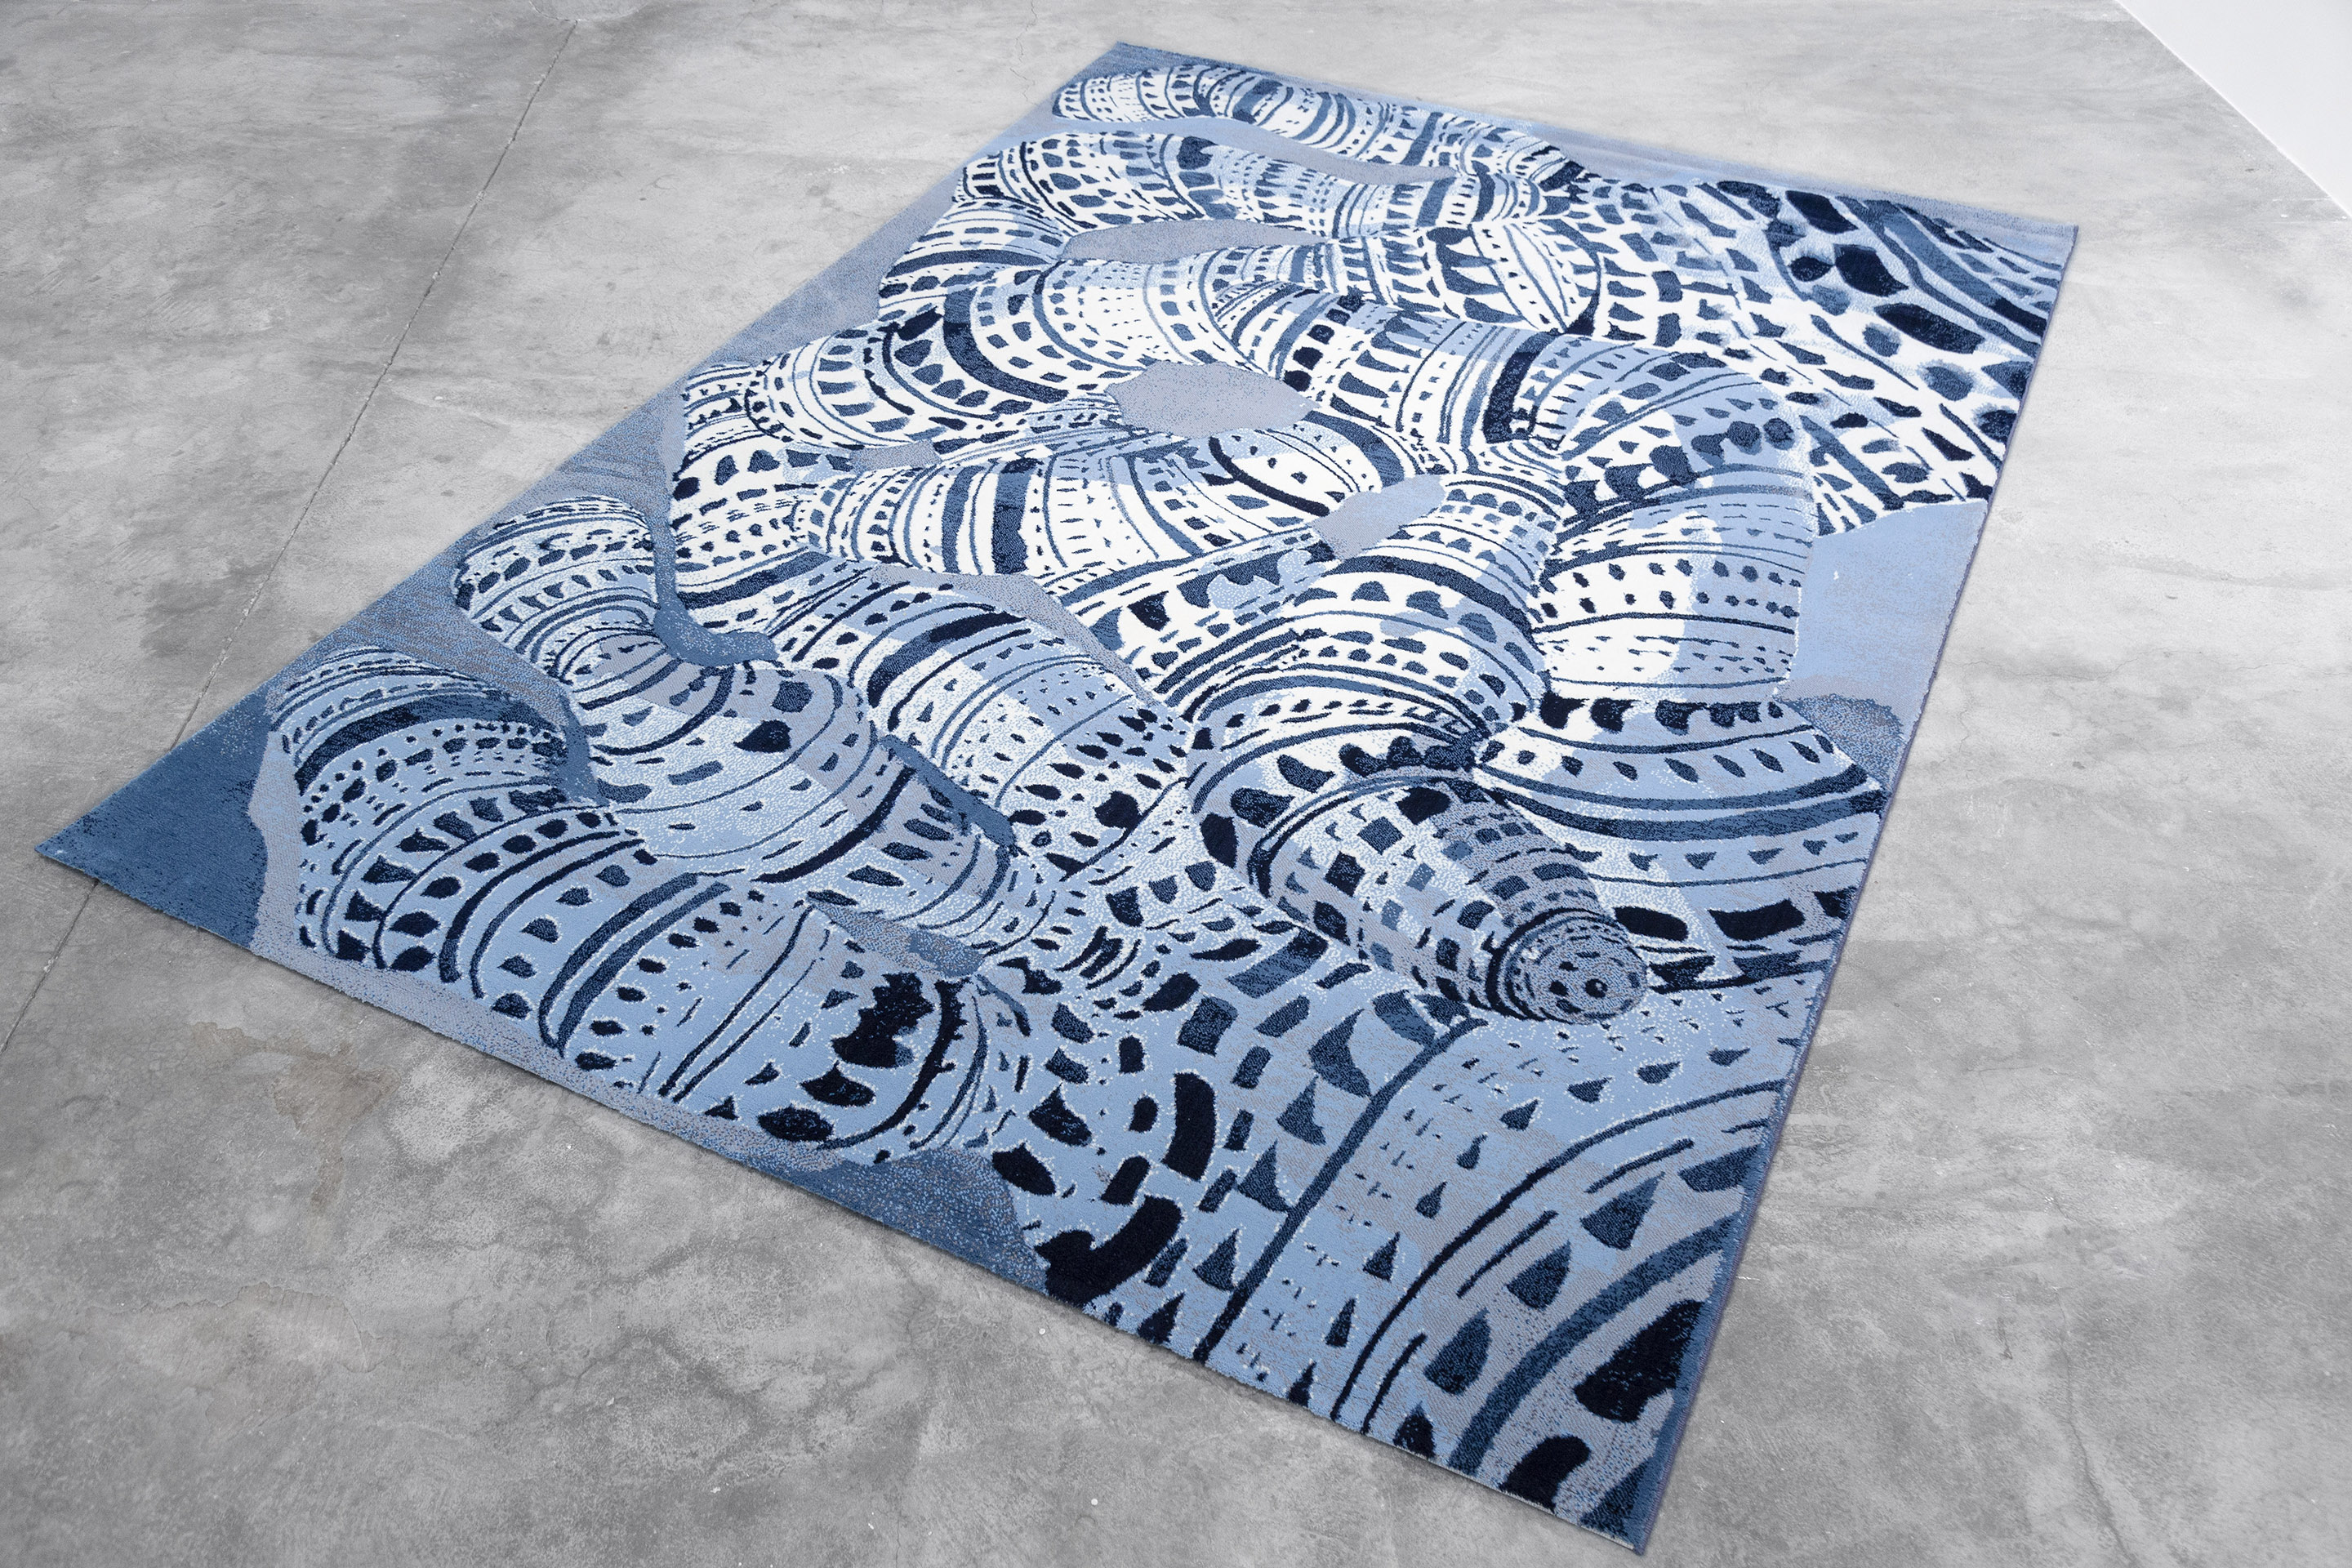 Textiles II

Tony CRAGG, Form Code Blue, 240x340 cm

photographie ©EmilieVialet